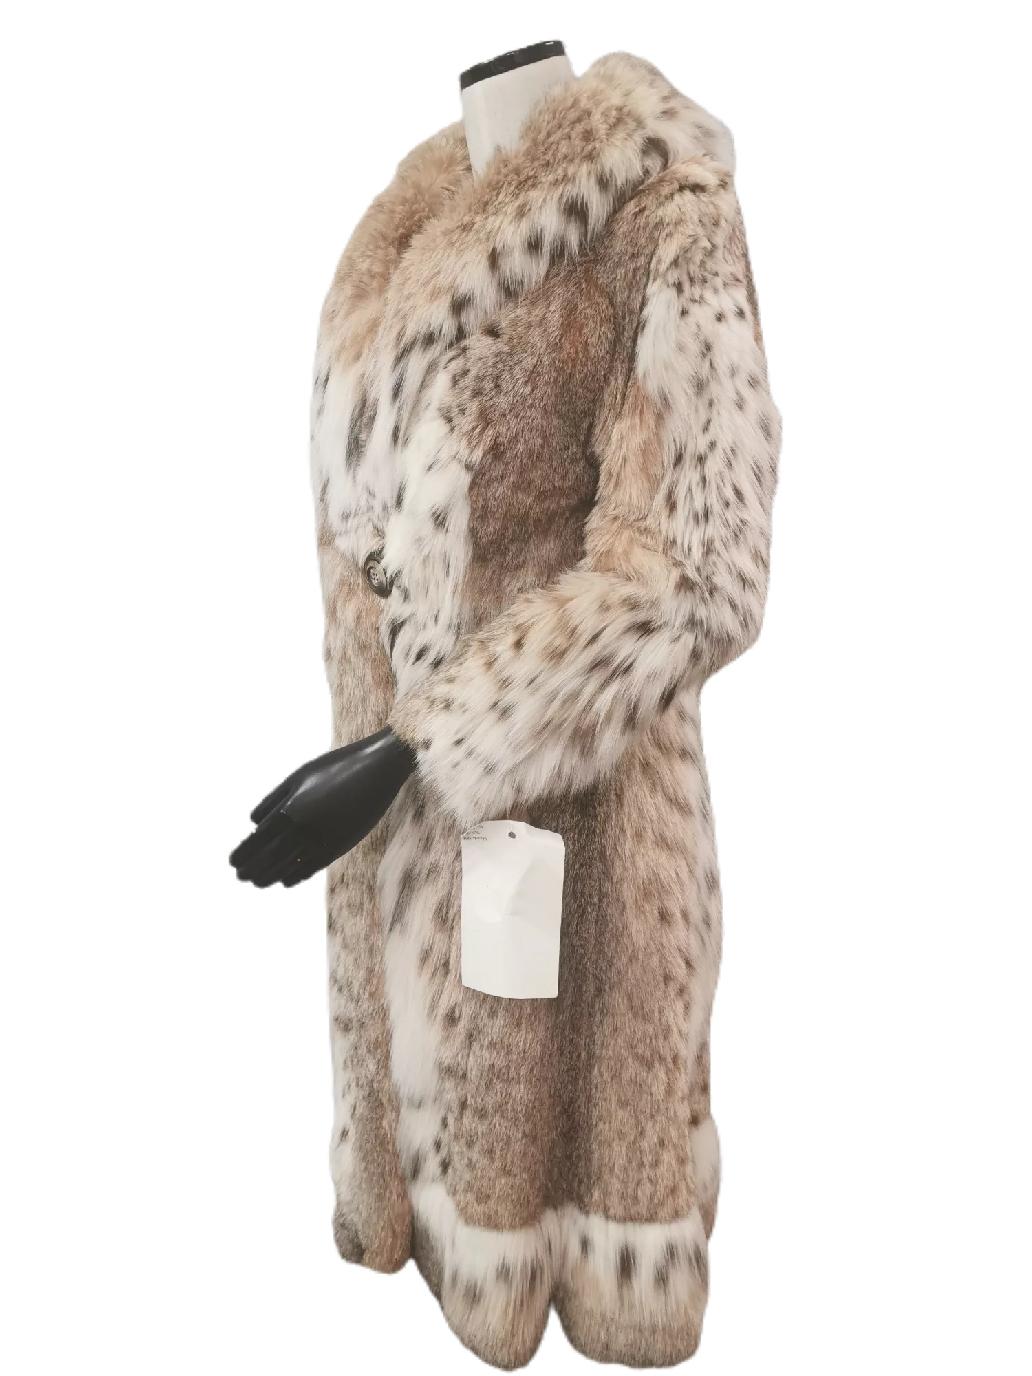 lynx fur coat vintage